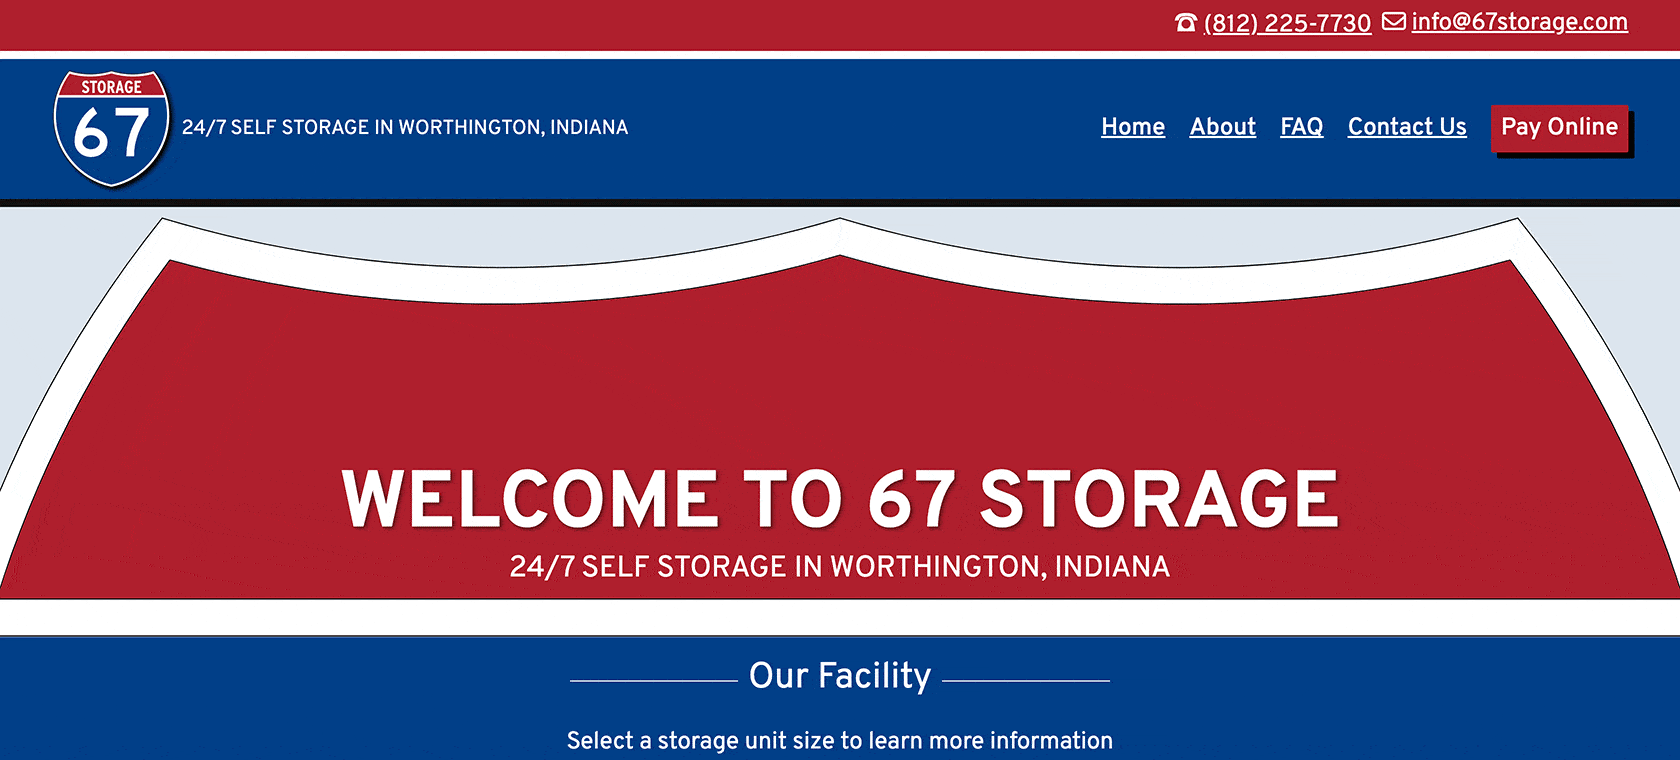 Building 67 Storage: A Branding Case Study